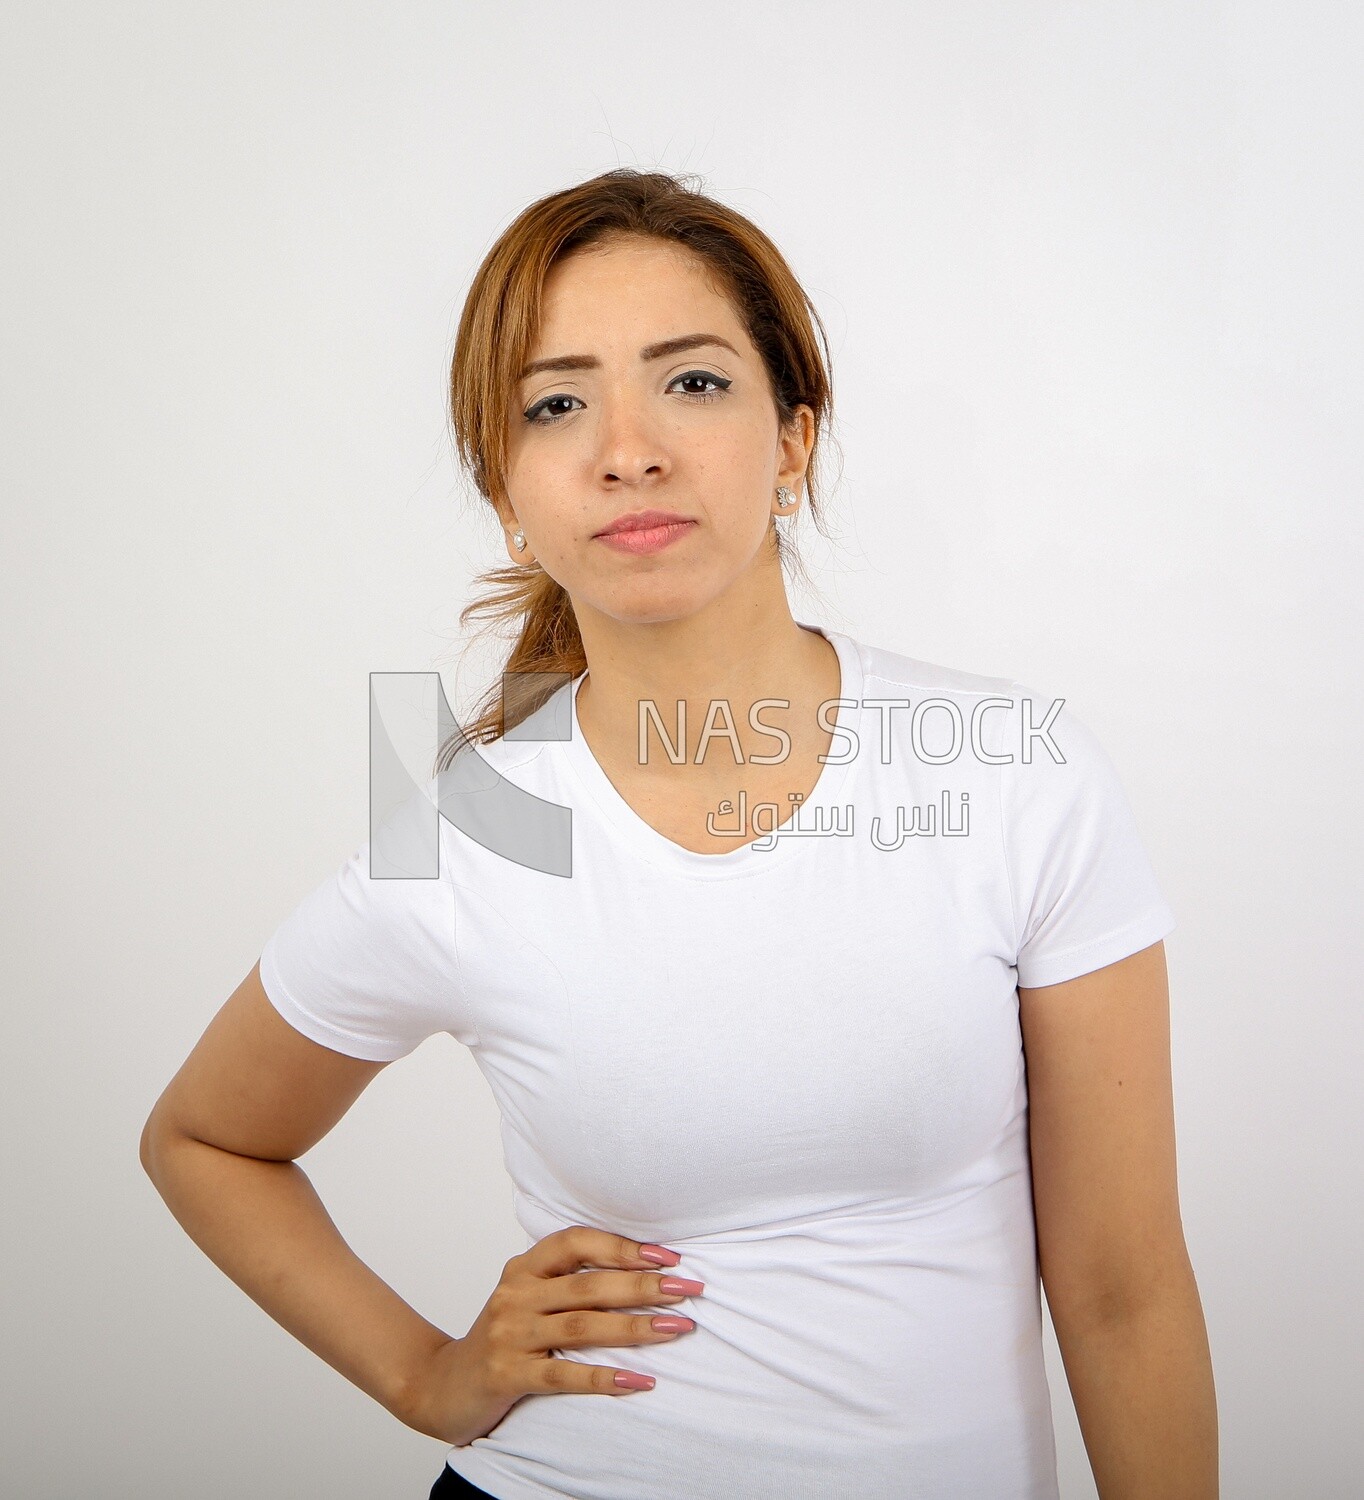 A woman wearing sportswear on a white background